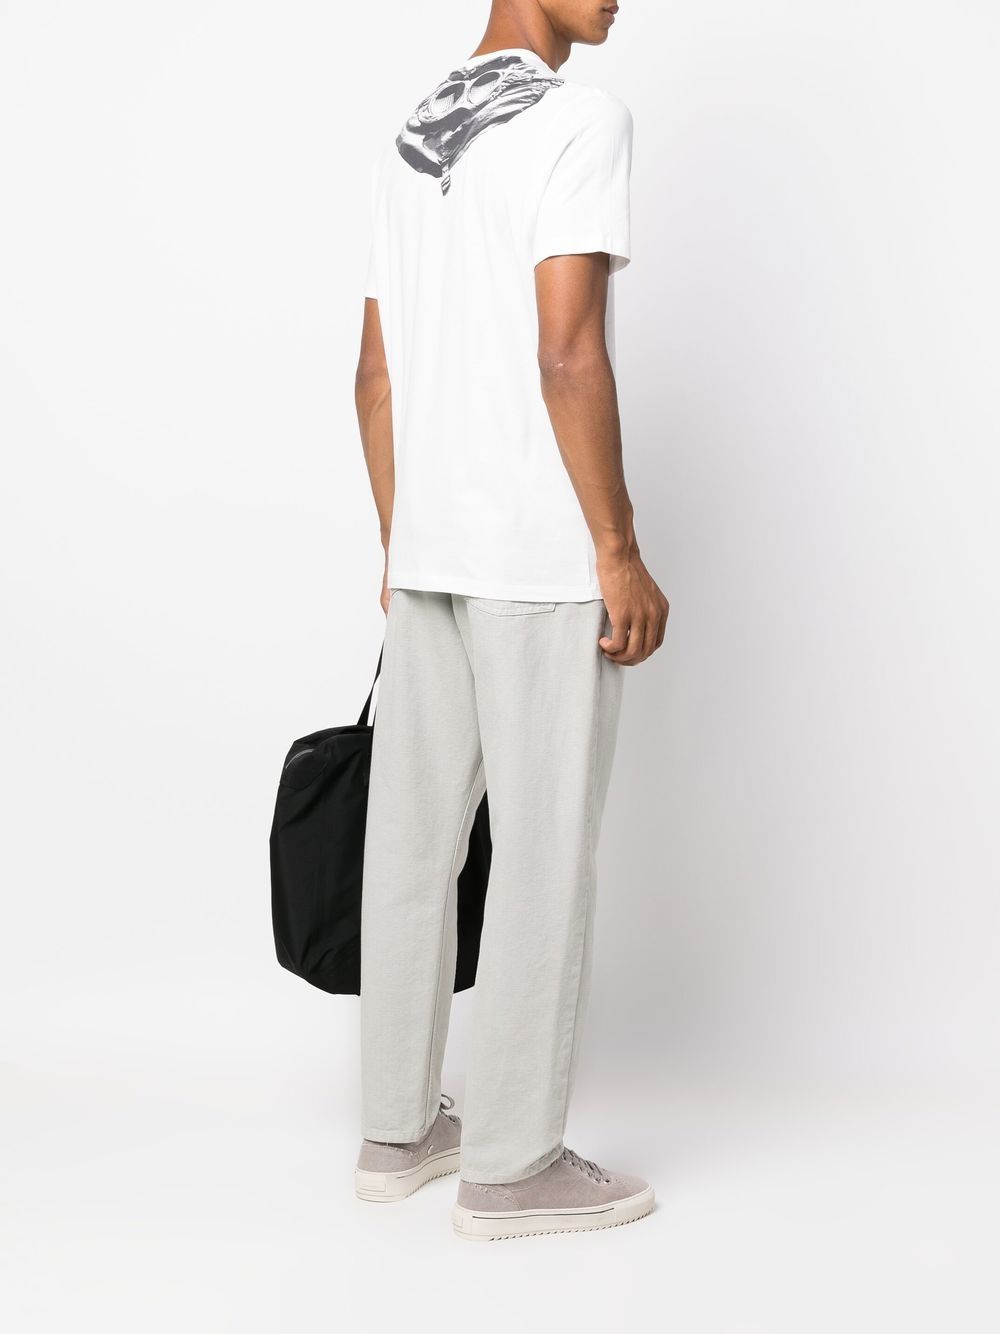 C.P. Company -T-shirt blanc 30/1 Jersey Goggle - Lothaire boutiques